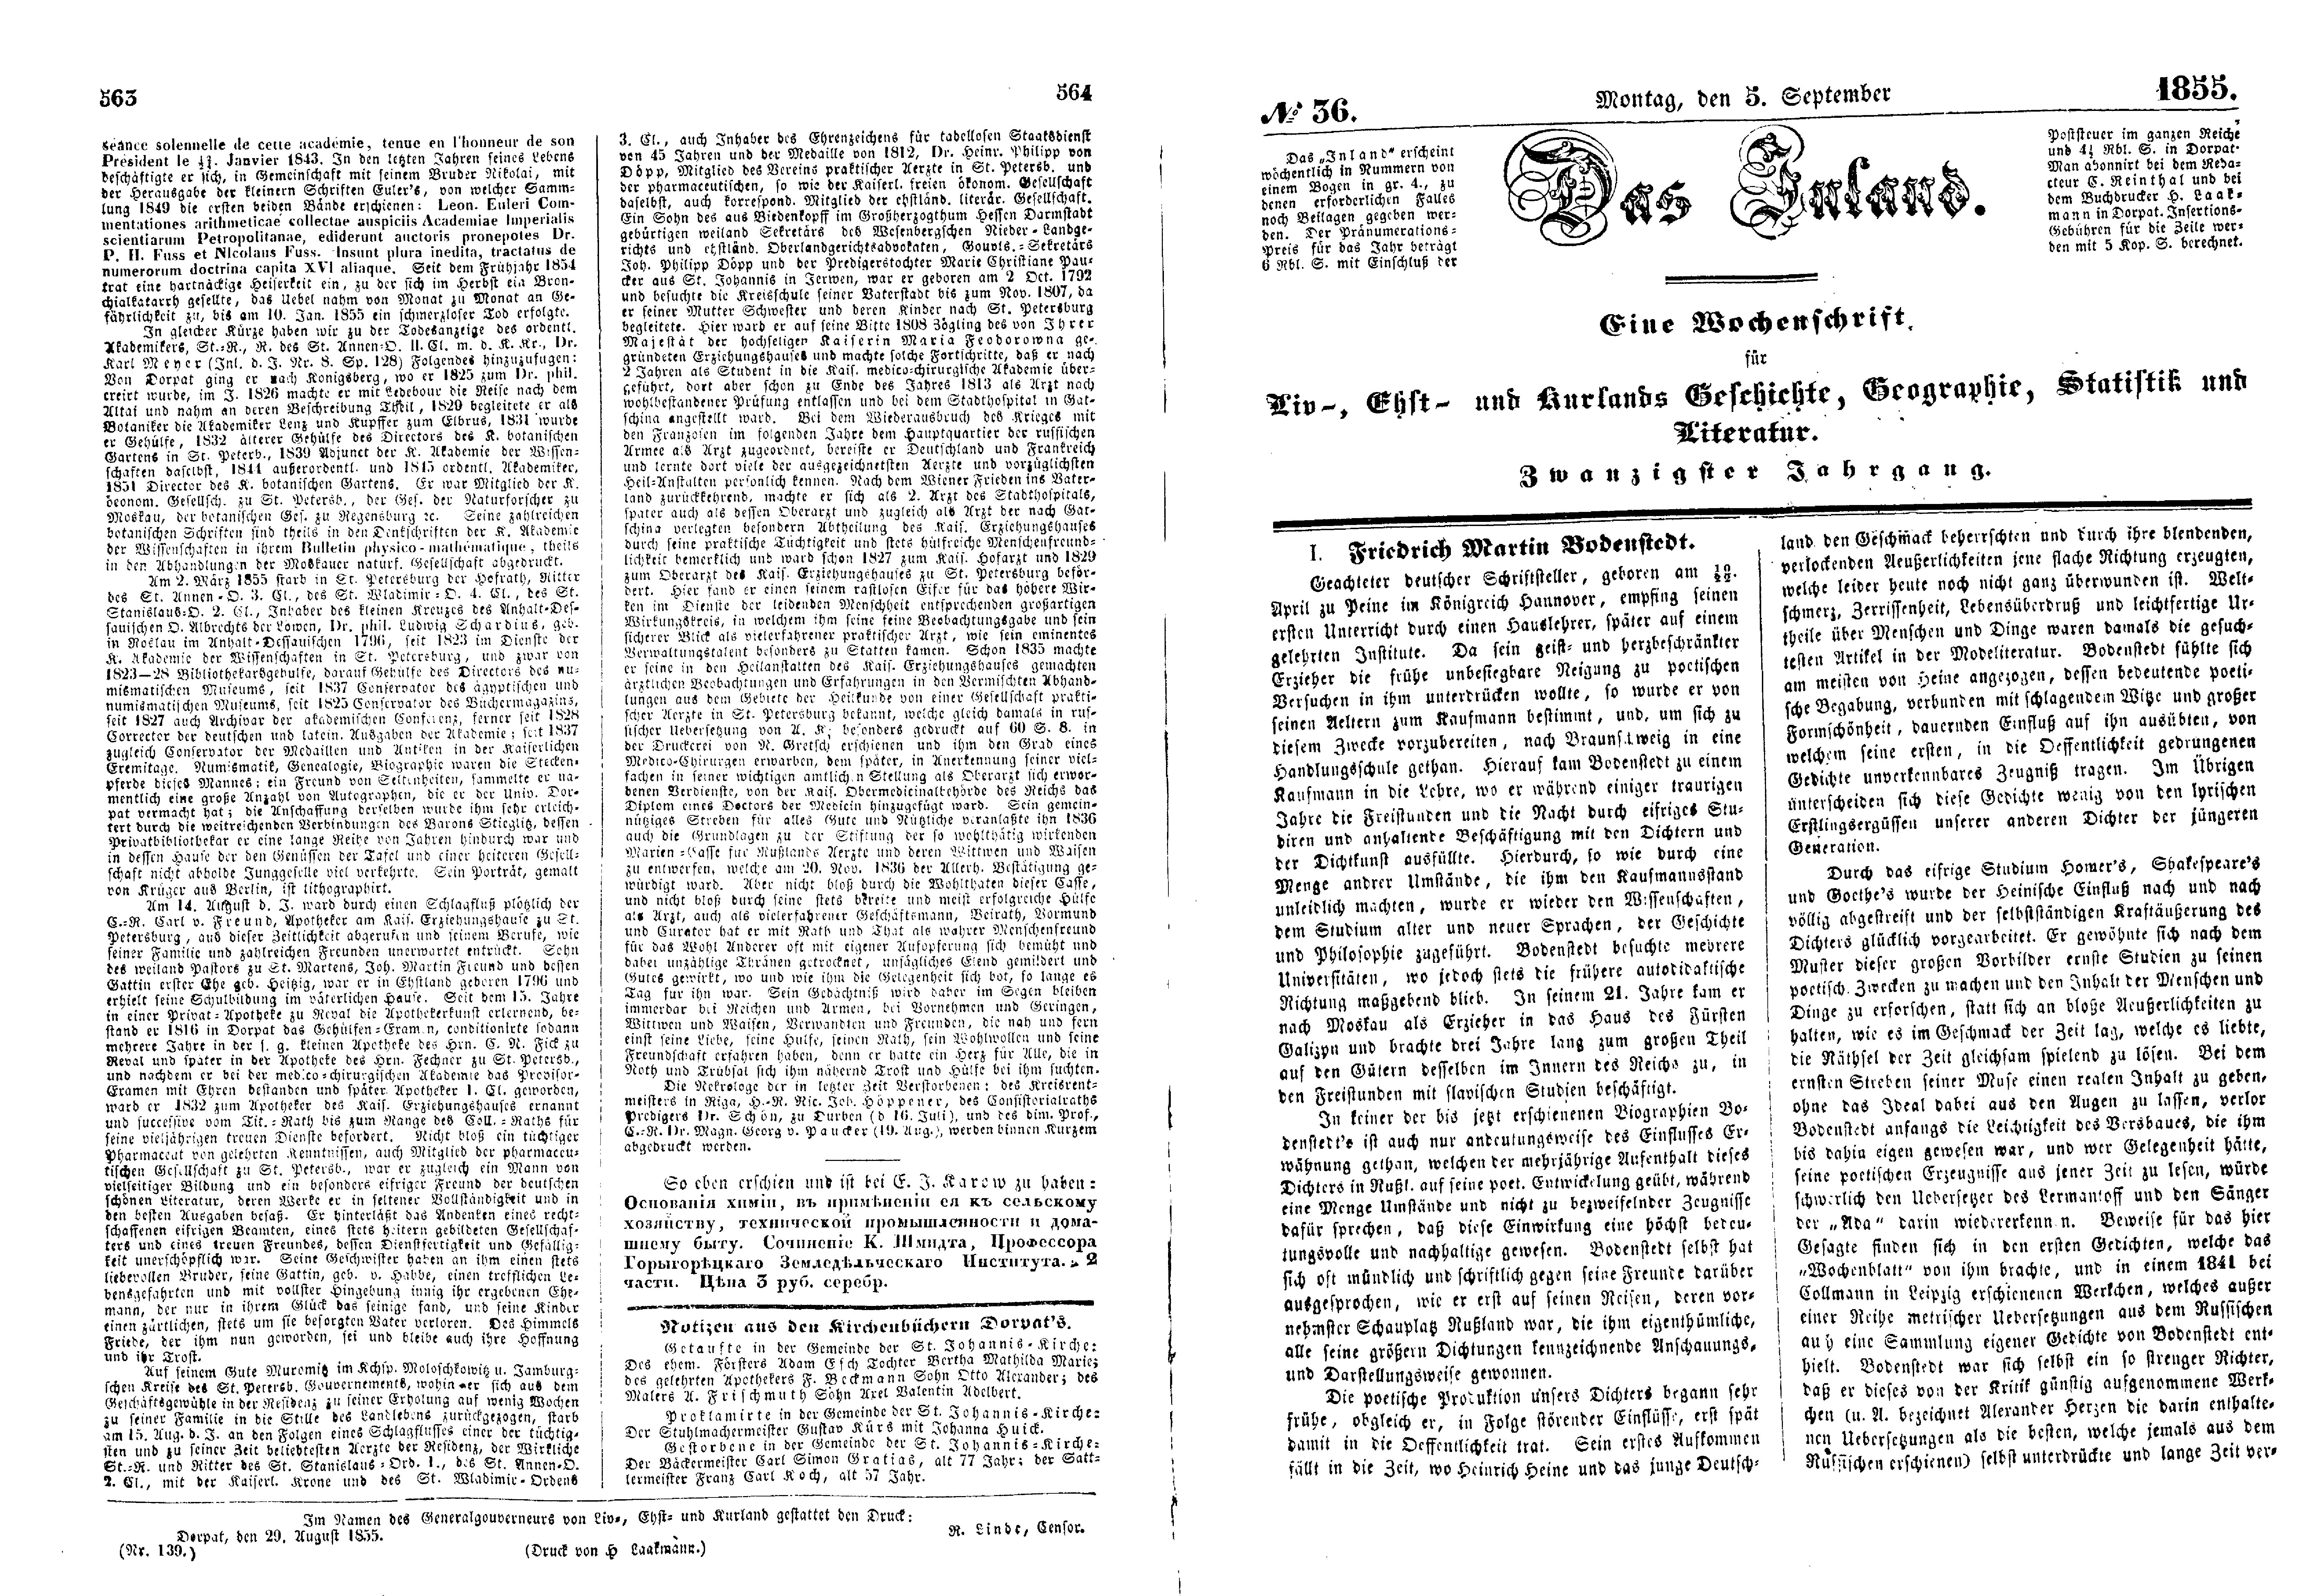 Das Inland [20] (1855) | 149. (563-566) Main body of text